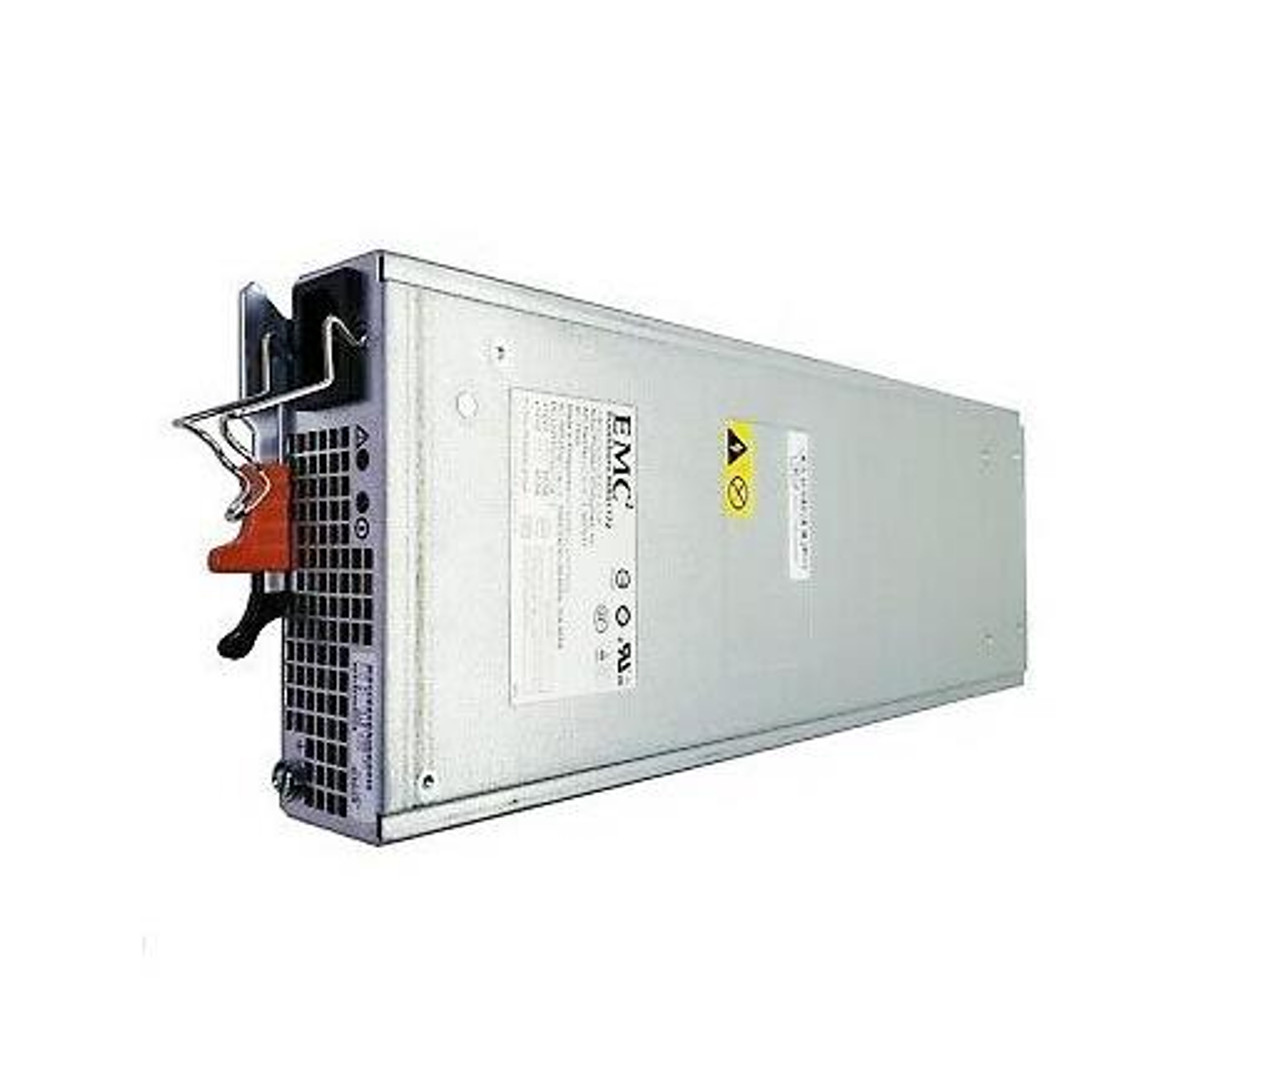 EMC Power Supply for Storage Processor VNX5200